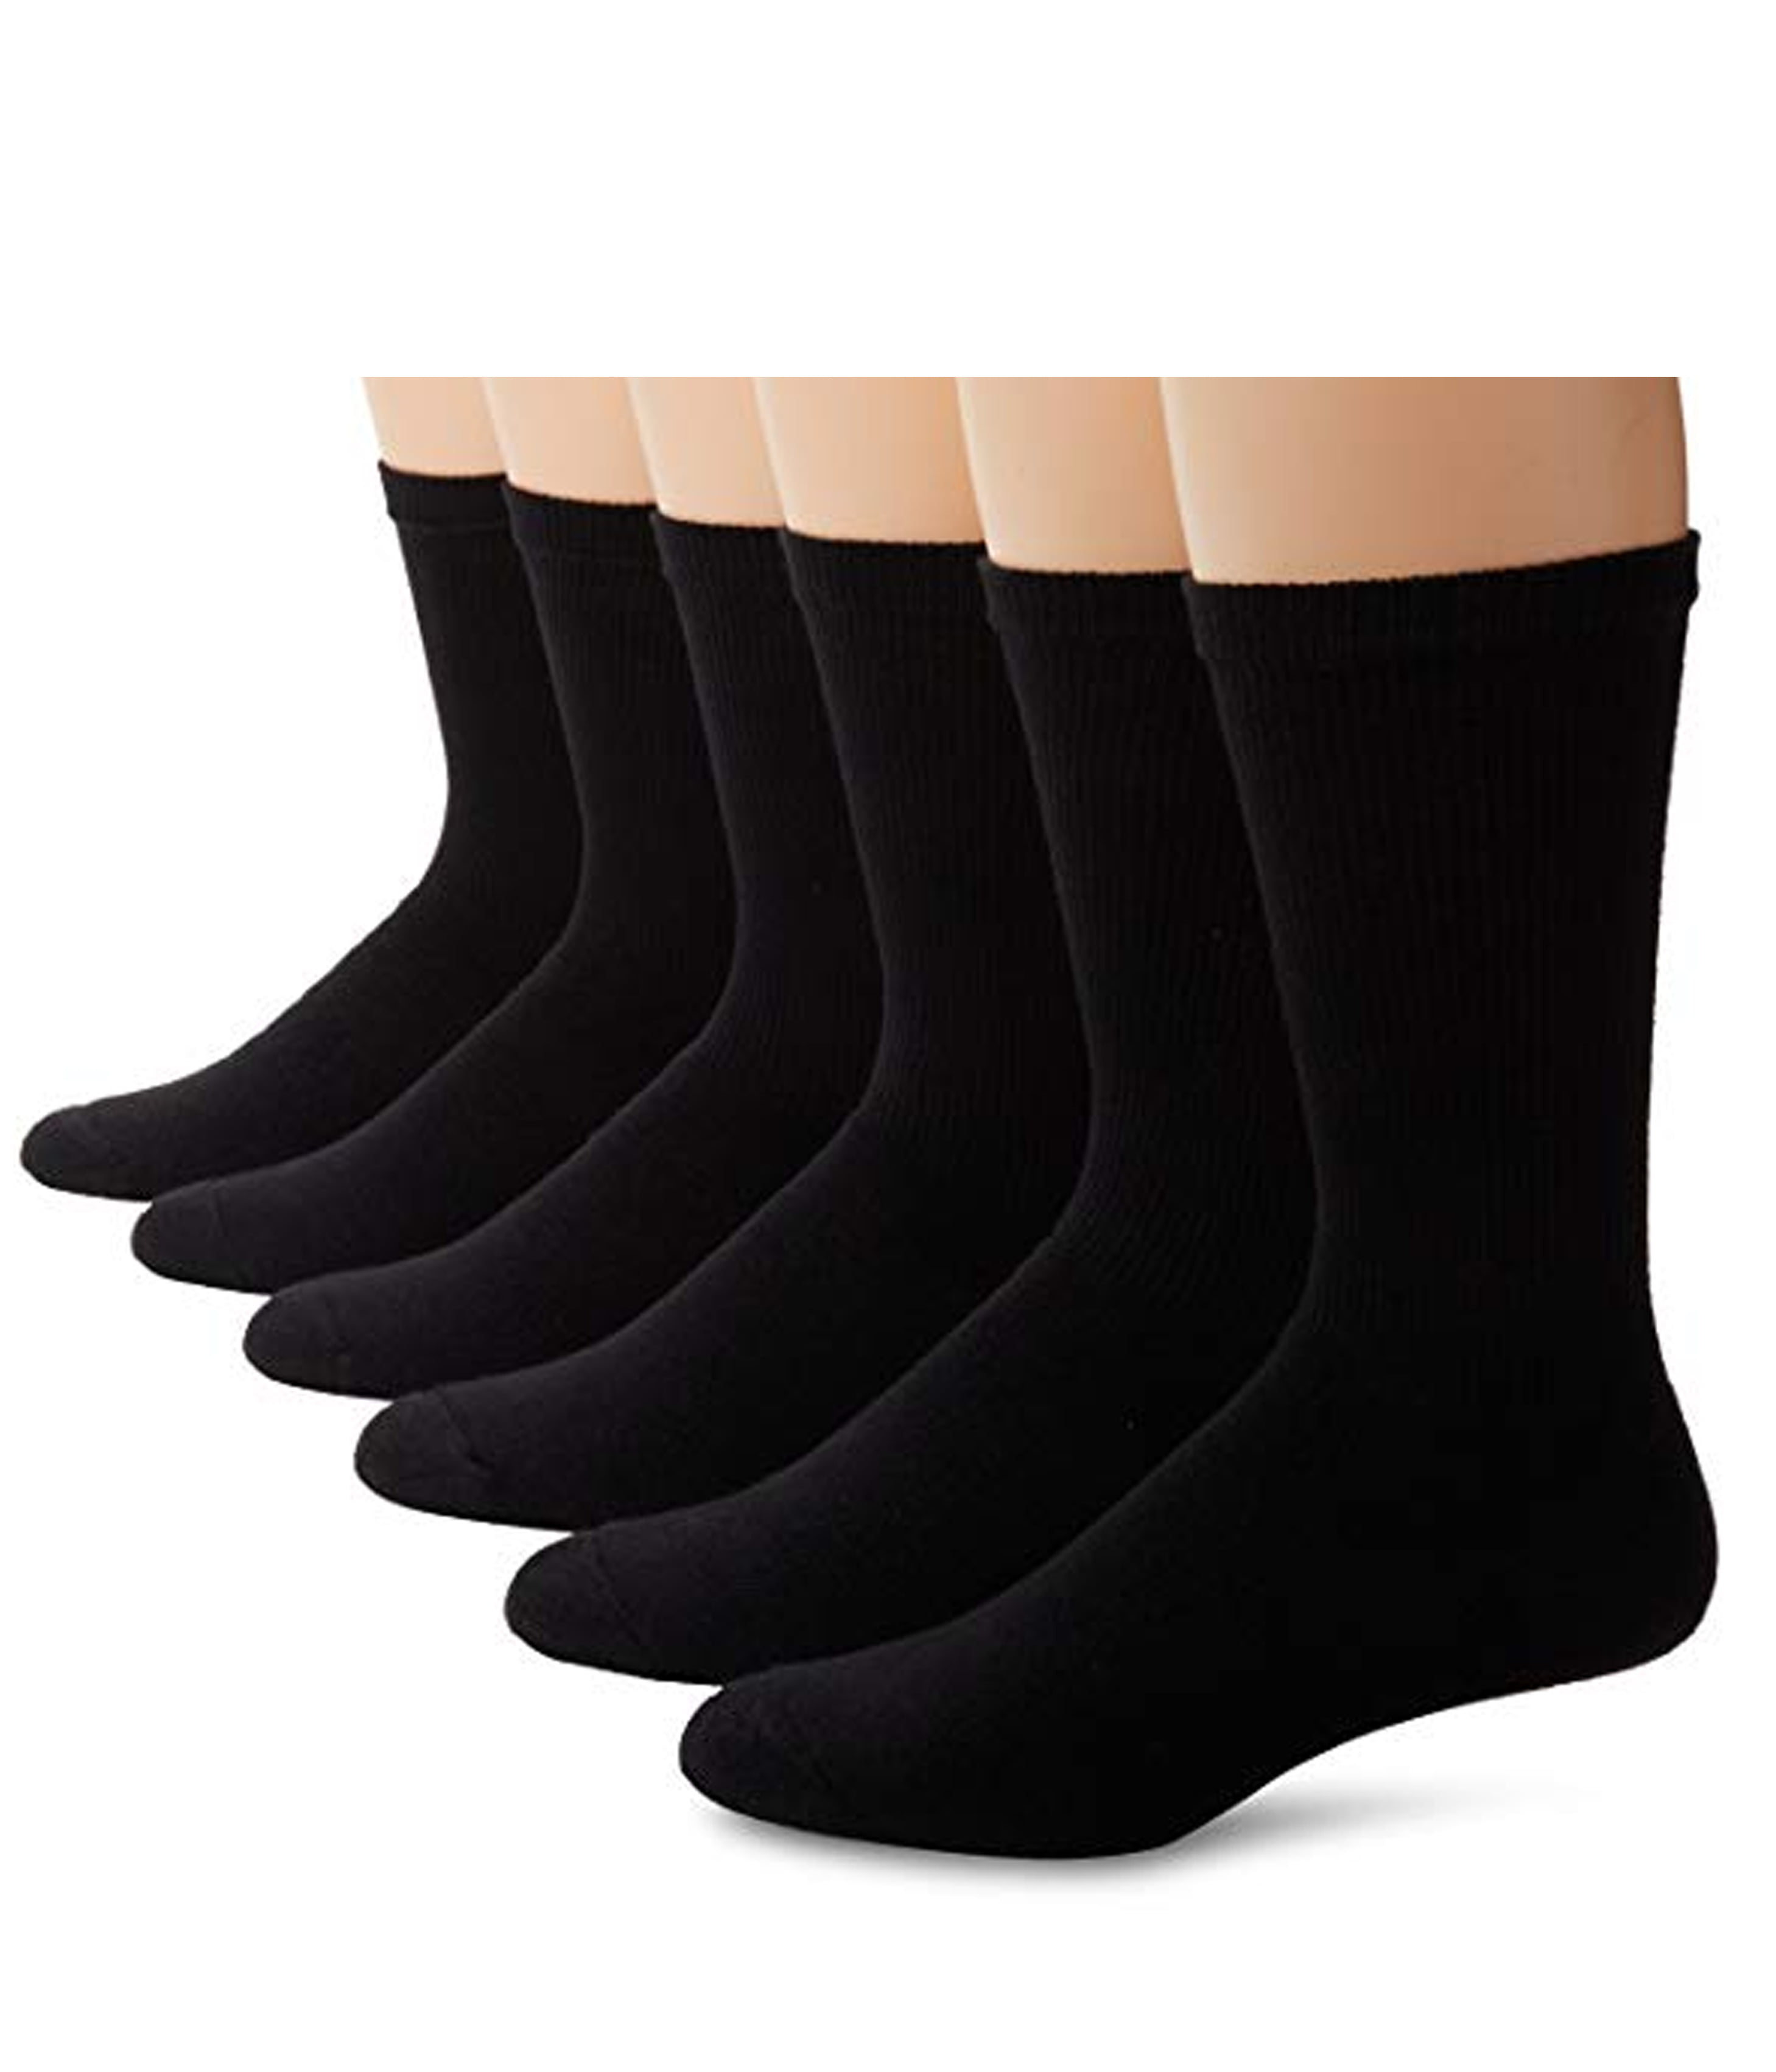 Soccer Sock with Paw Print White/Black Sz 6-8.5 